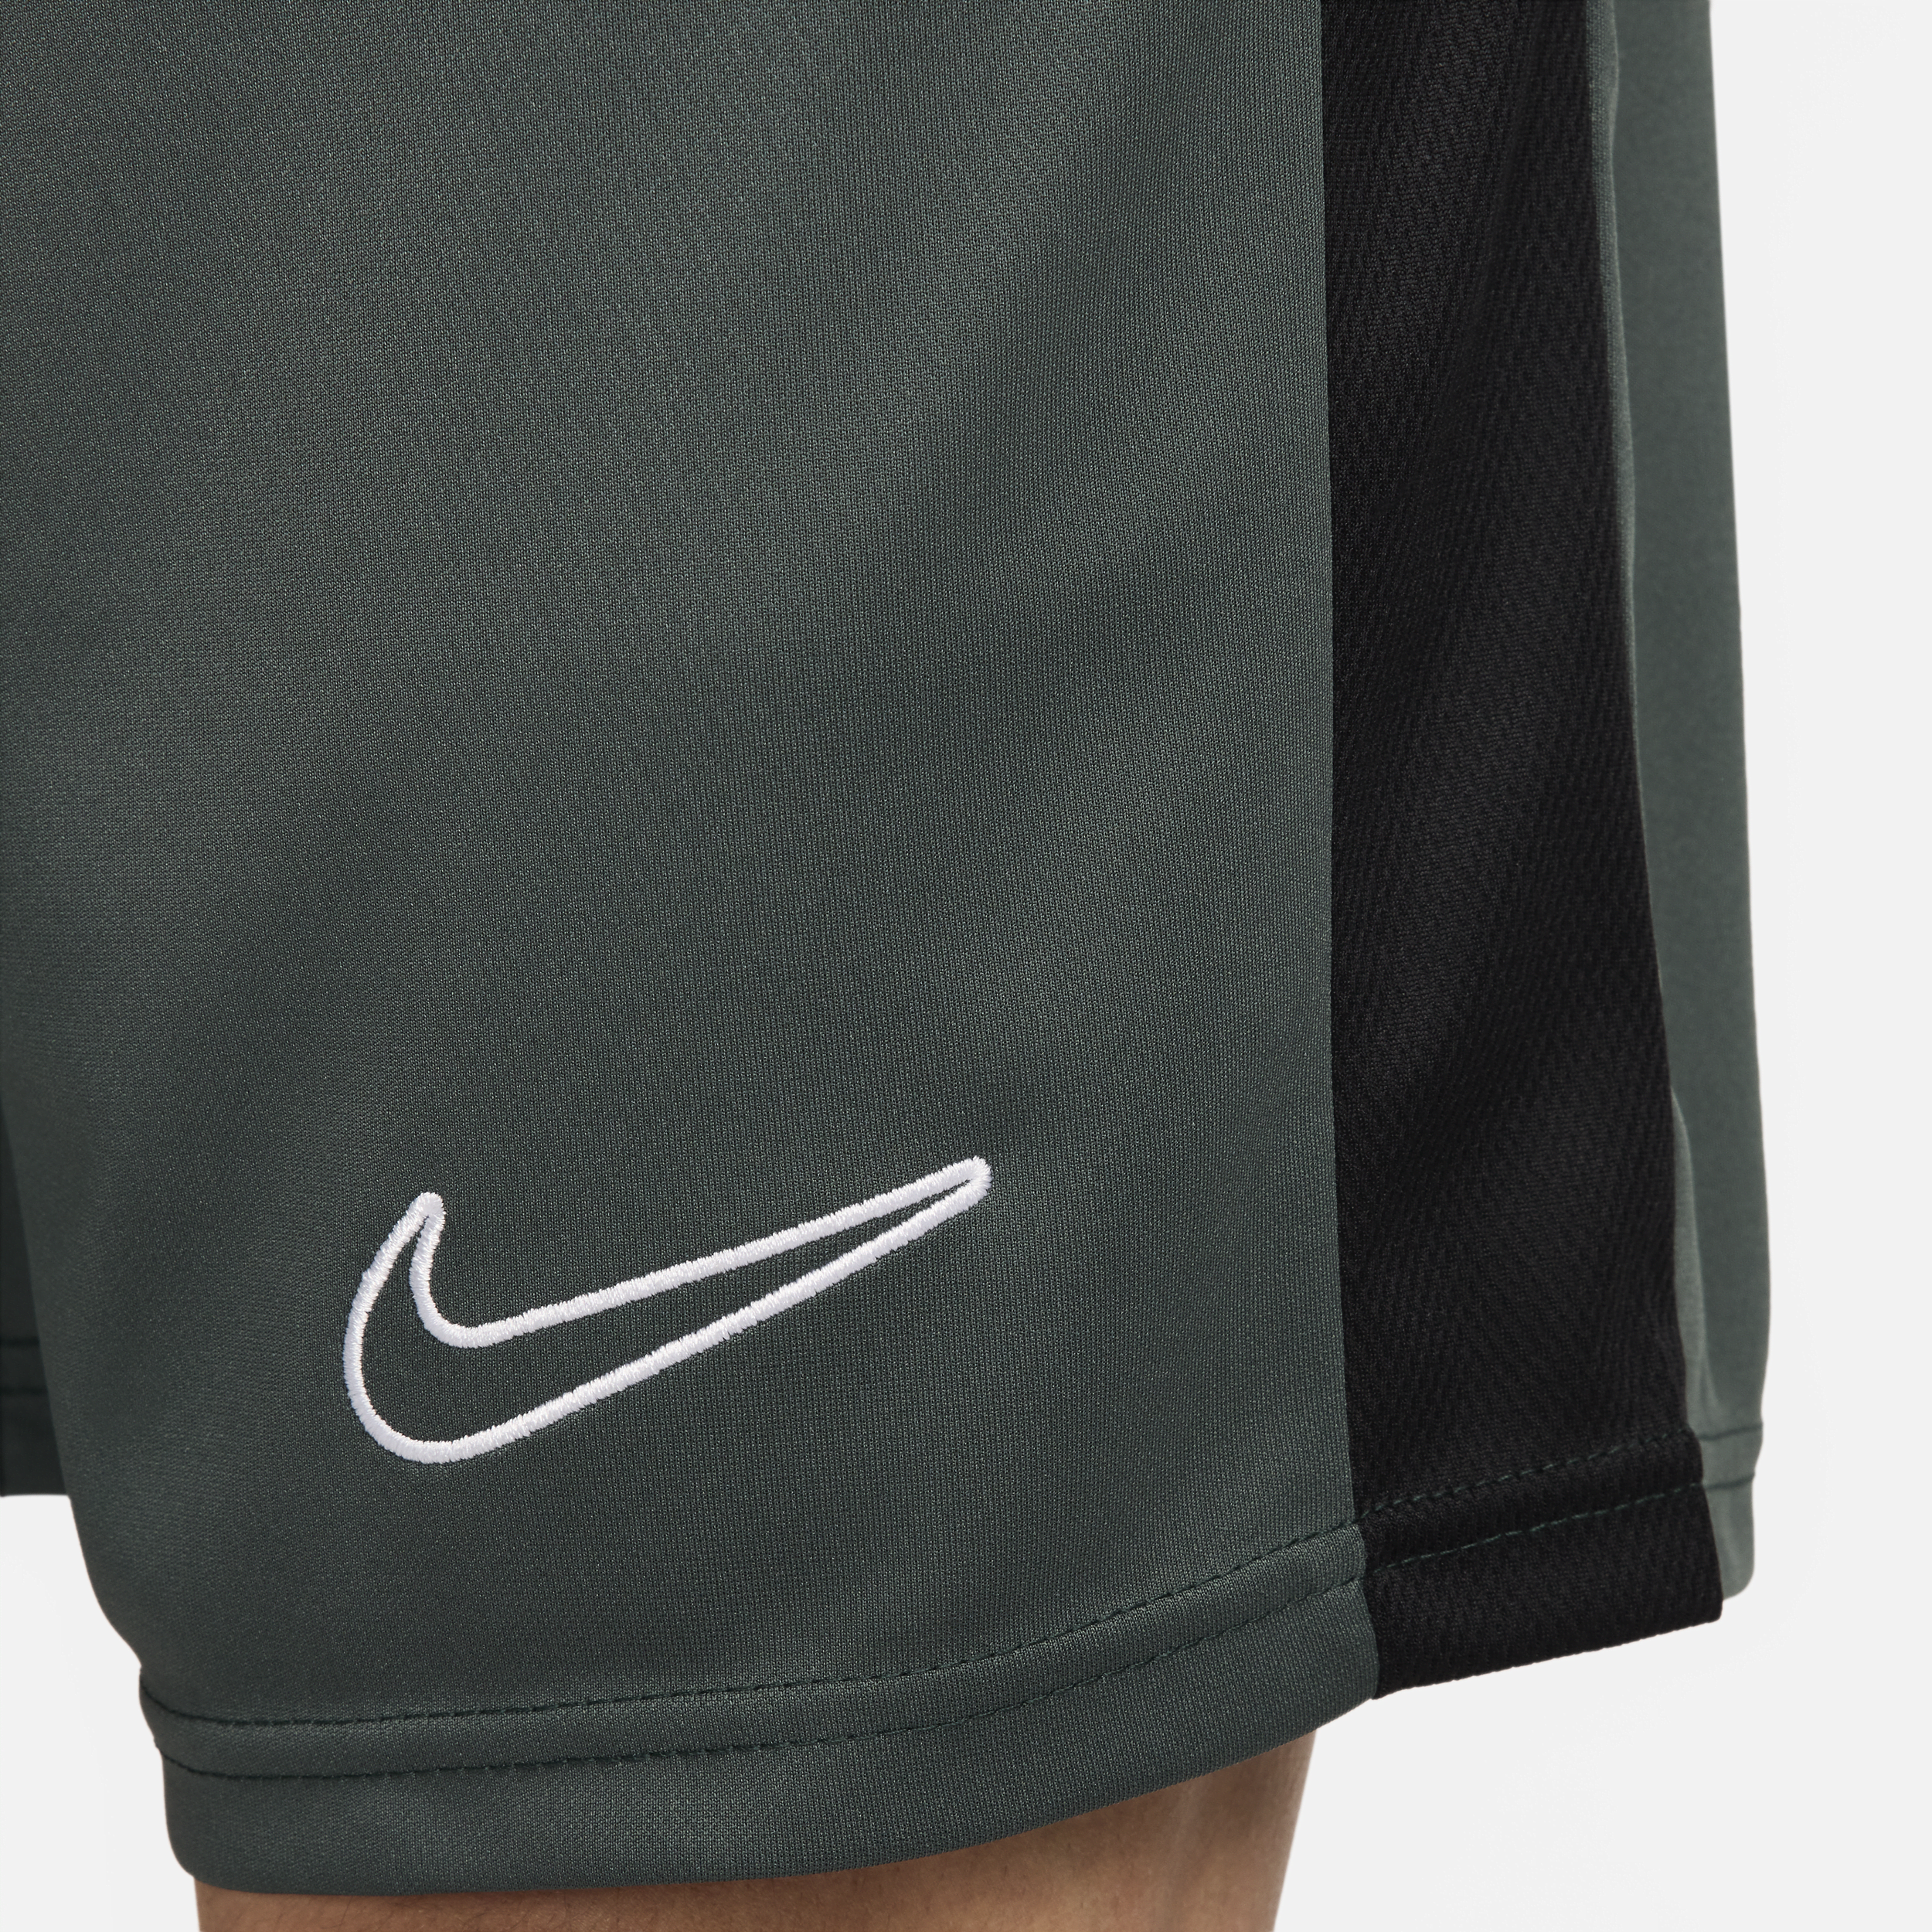 Nike Dri-FIT Academy Dri-FIT voetbalshorts voor heren Groen